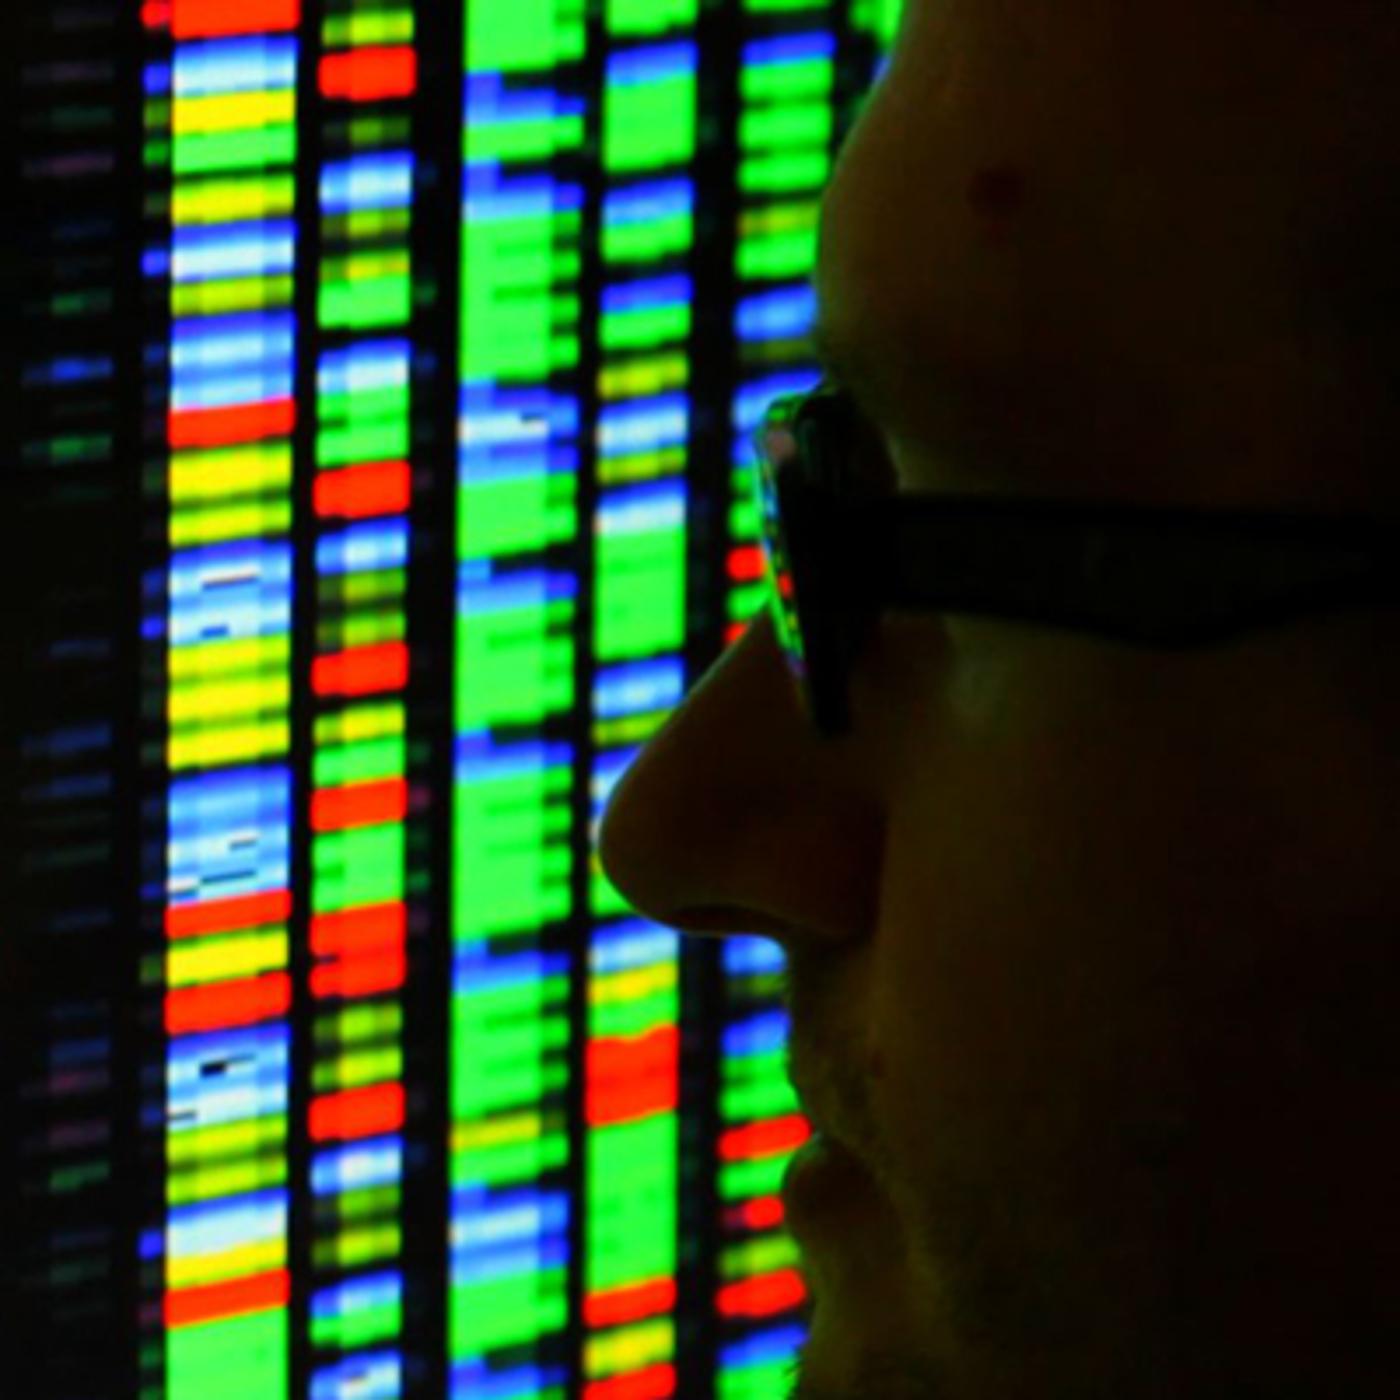 From Punnett to personal genomics: a century of genetics in Cambridge